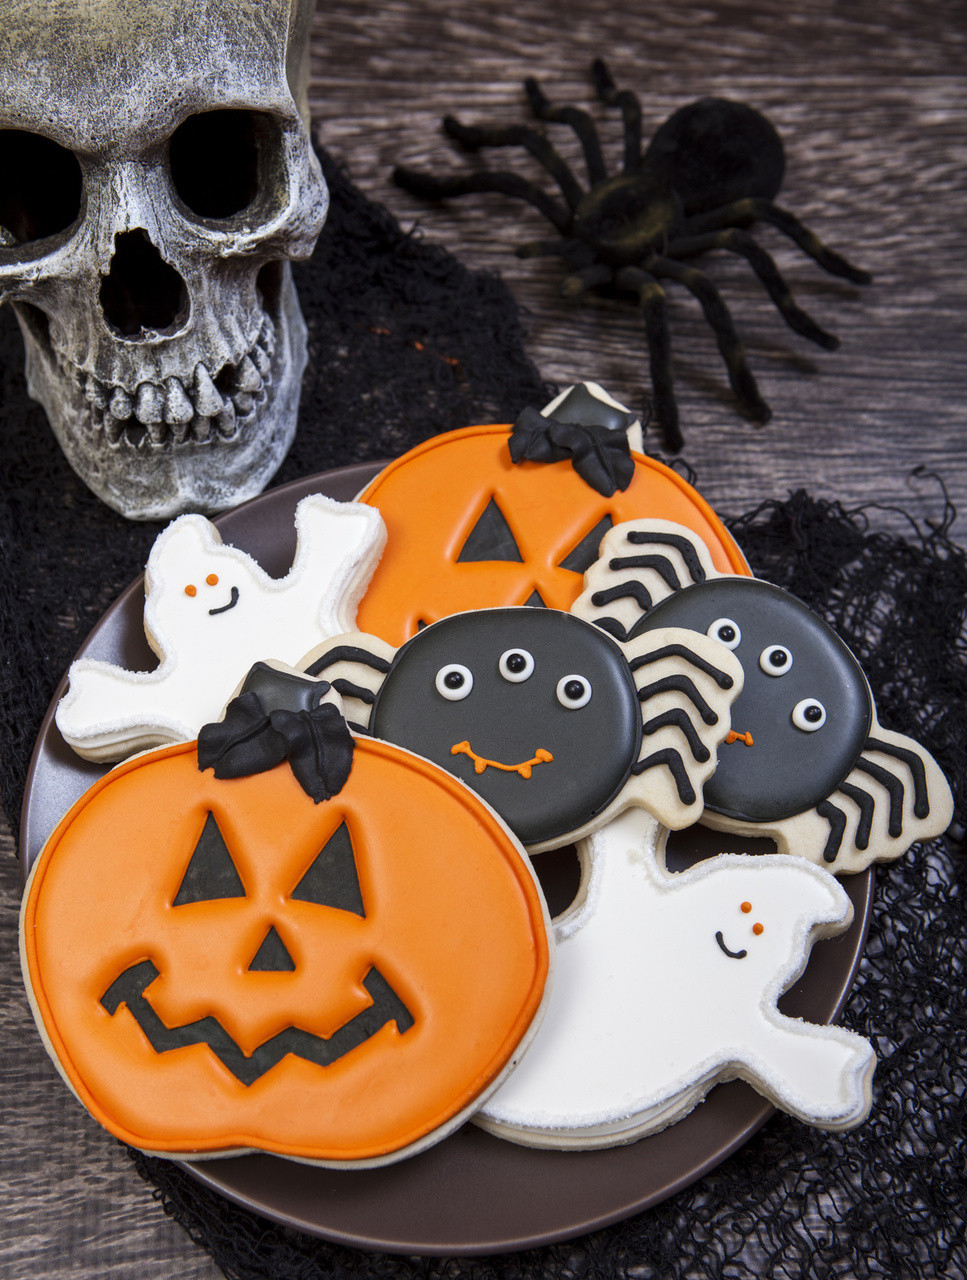 Halloween Cookie Decoration Ideas
 Spooky Cookie Halloween Cookie Decorations